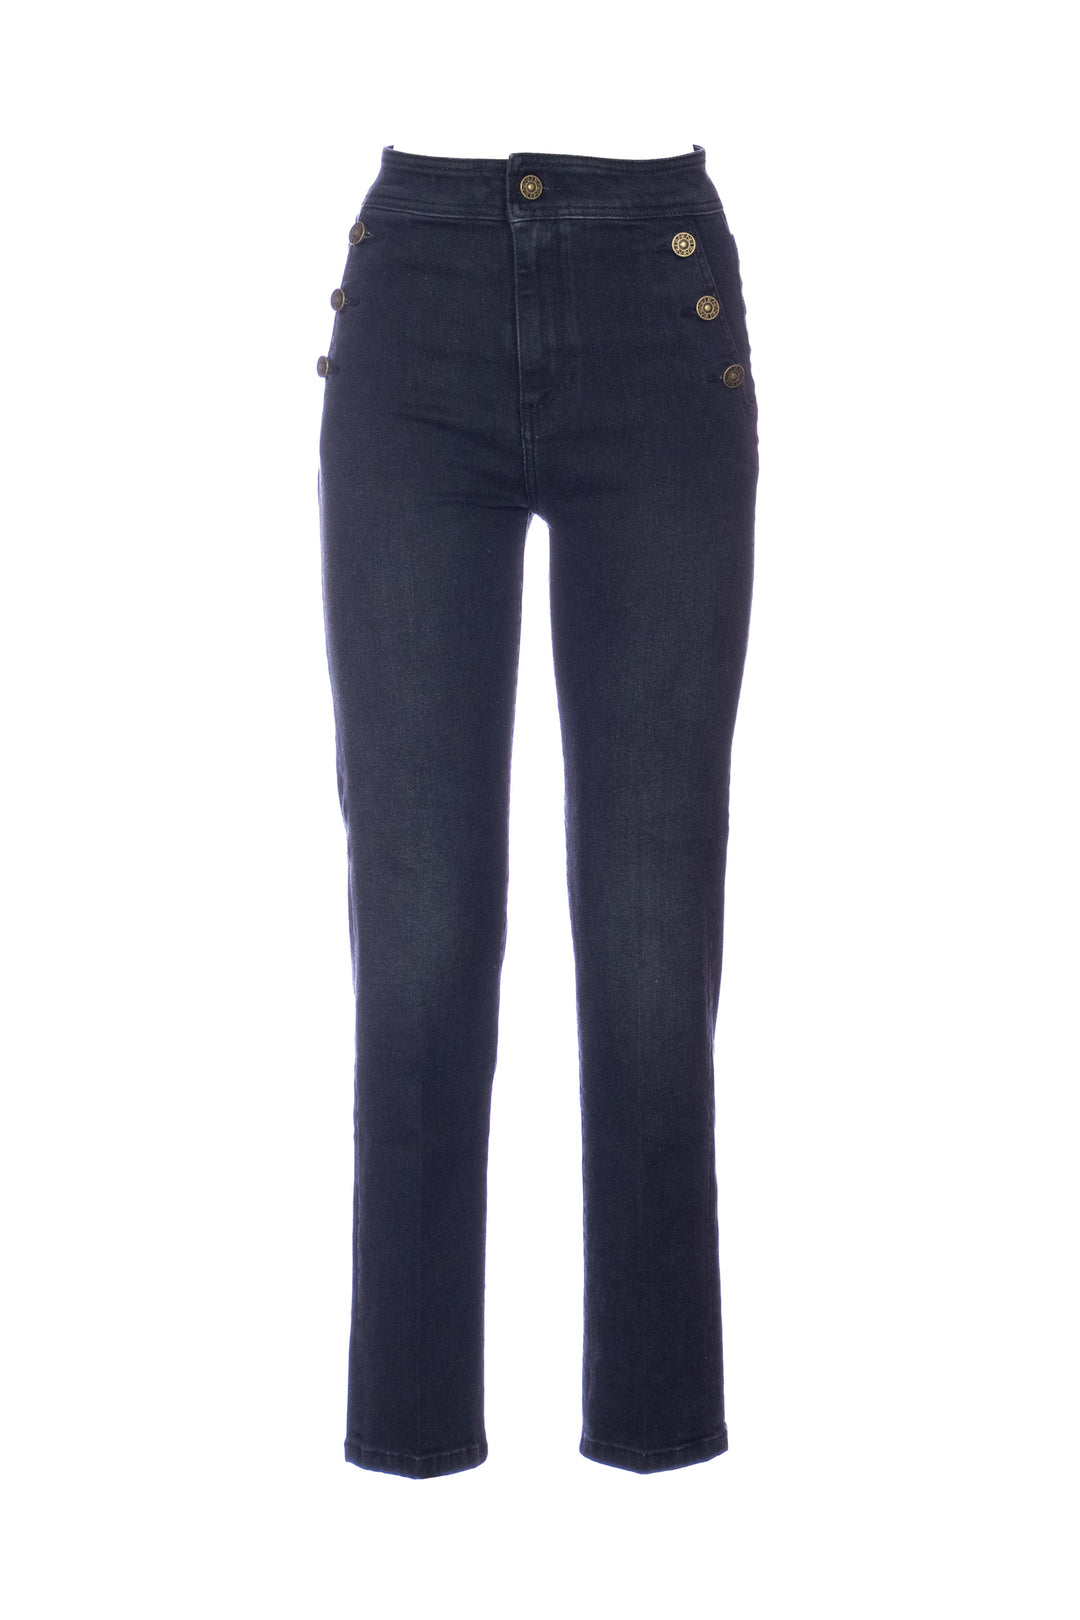 NENETTE Jeans regular “SCARLETB” in denim nero superstretch - Mancinelli 1954